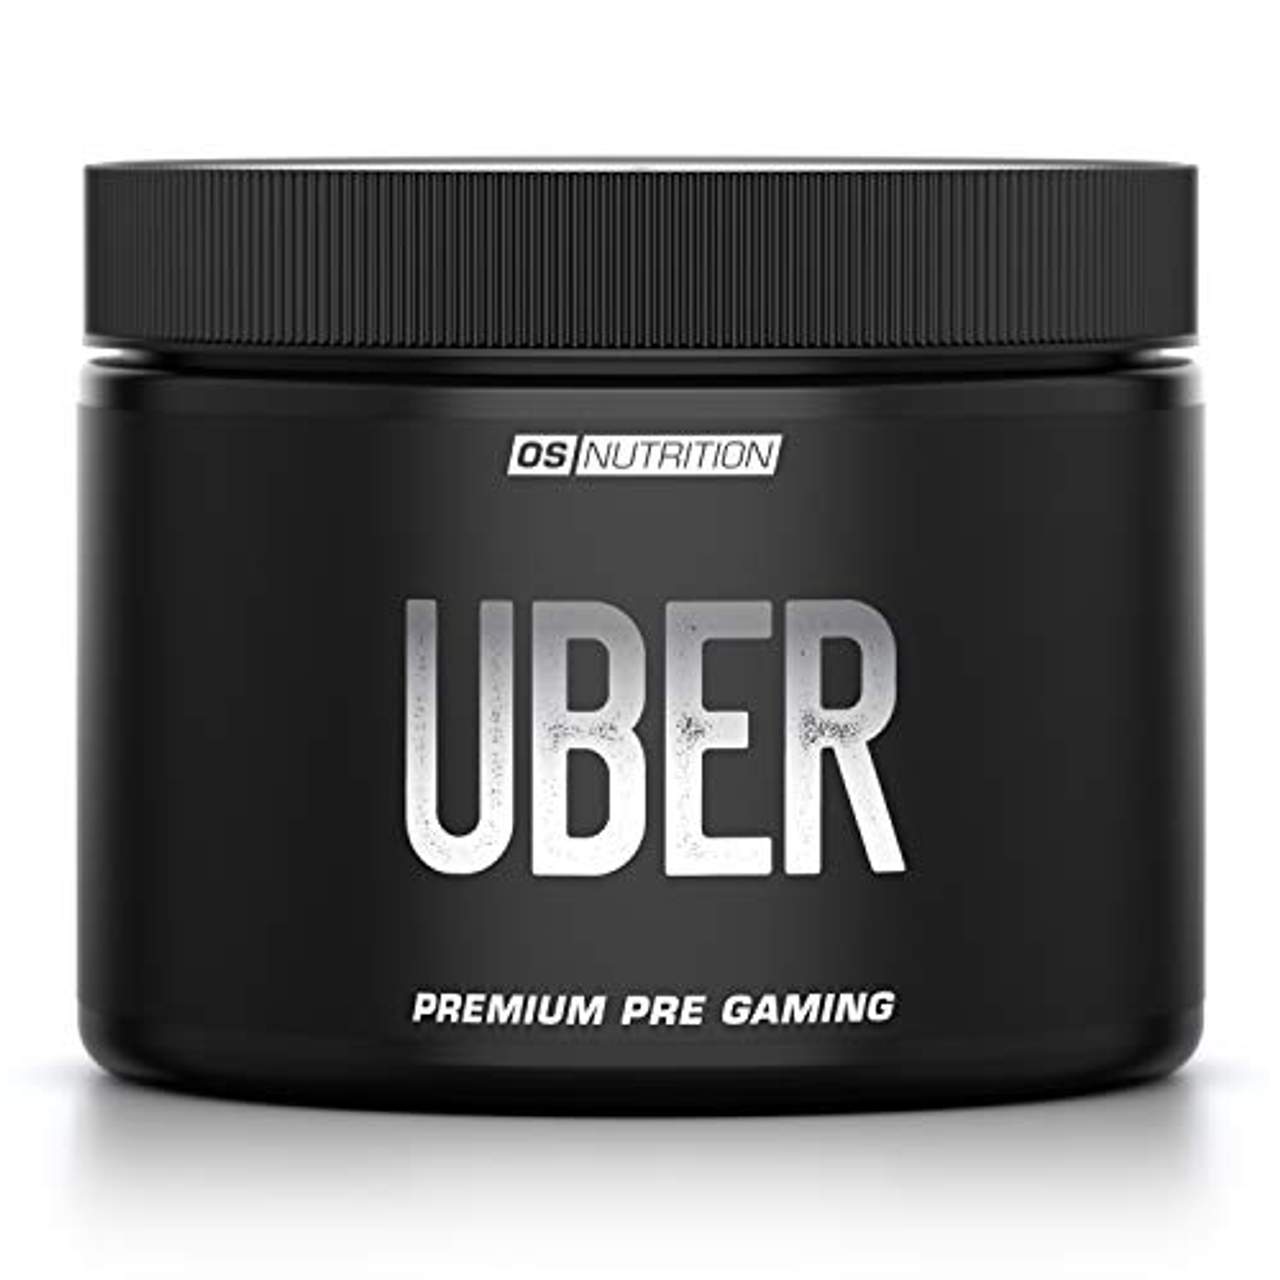 OS NUTRITION Uber Premium Pre Gaming Pfirsich-Eistee 210g